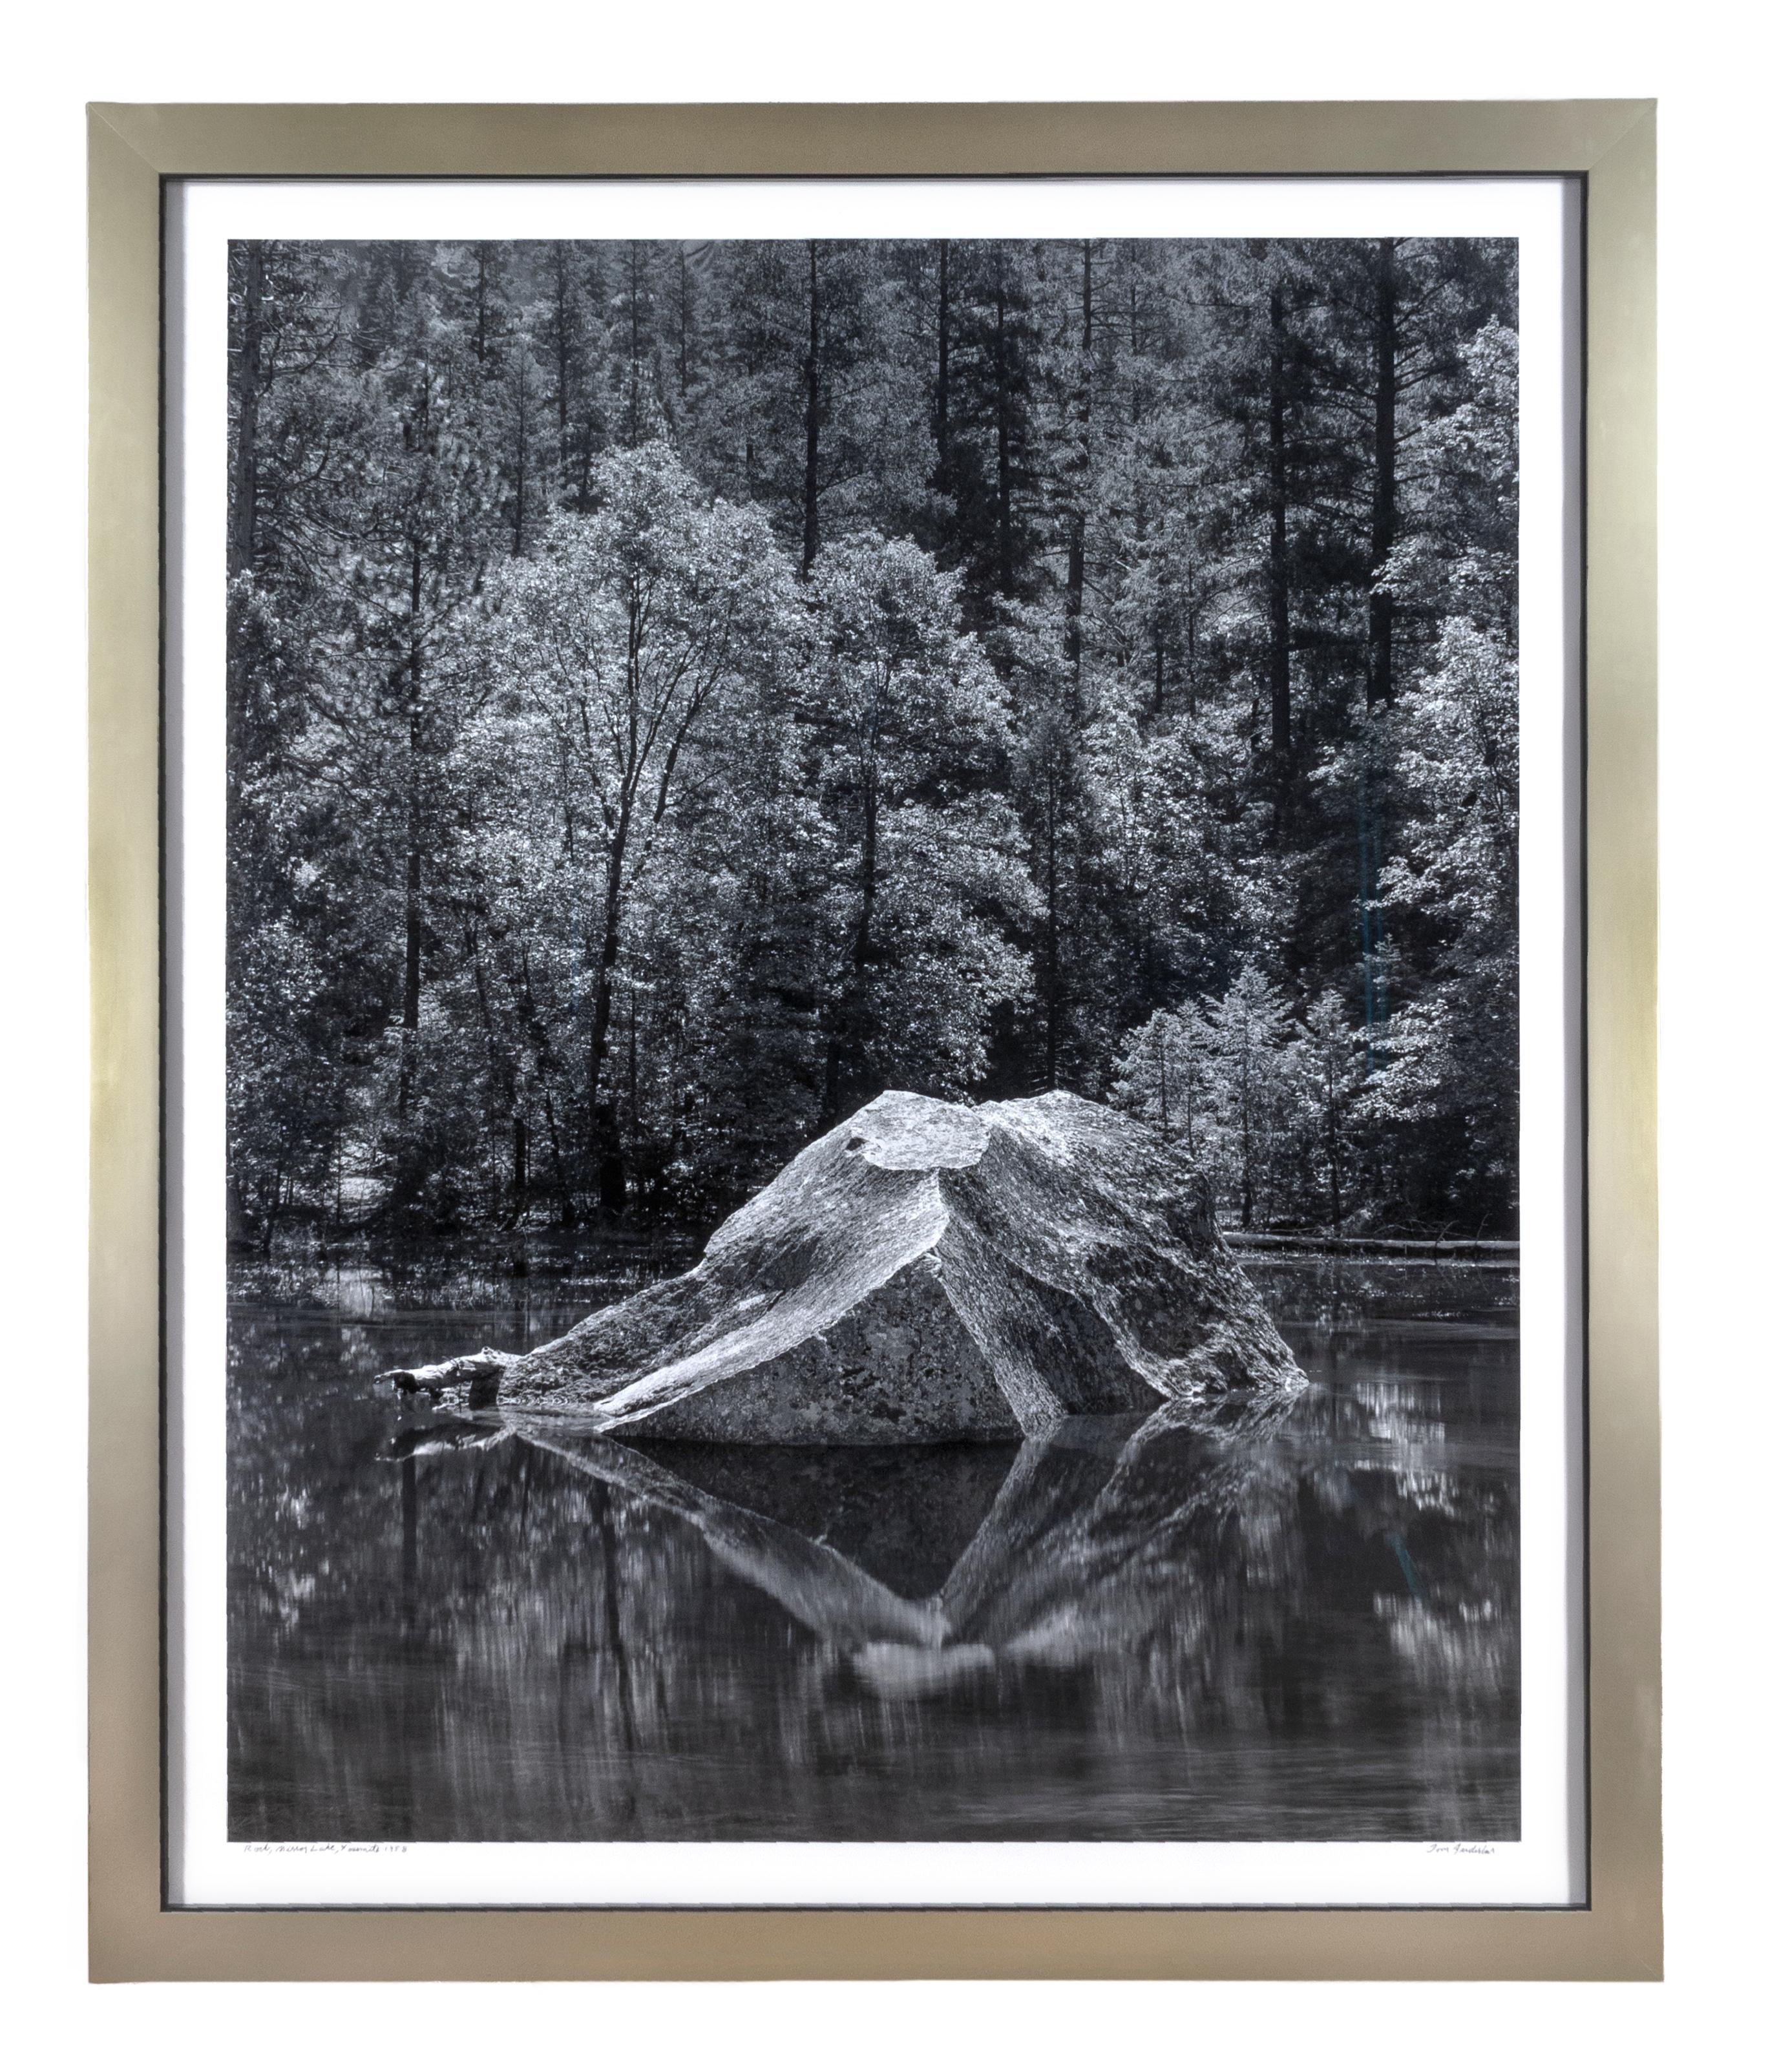 Landscape Photograph Thomas Ferderbar - « Rock, Mirror Lake, CA (Yosemite), » Photographie signée par Tom Ferderbar